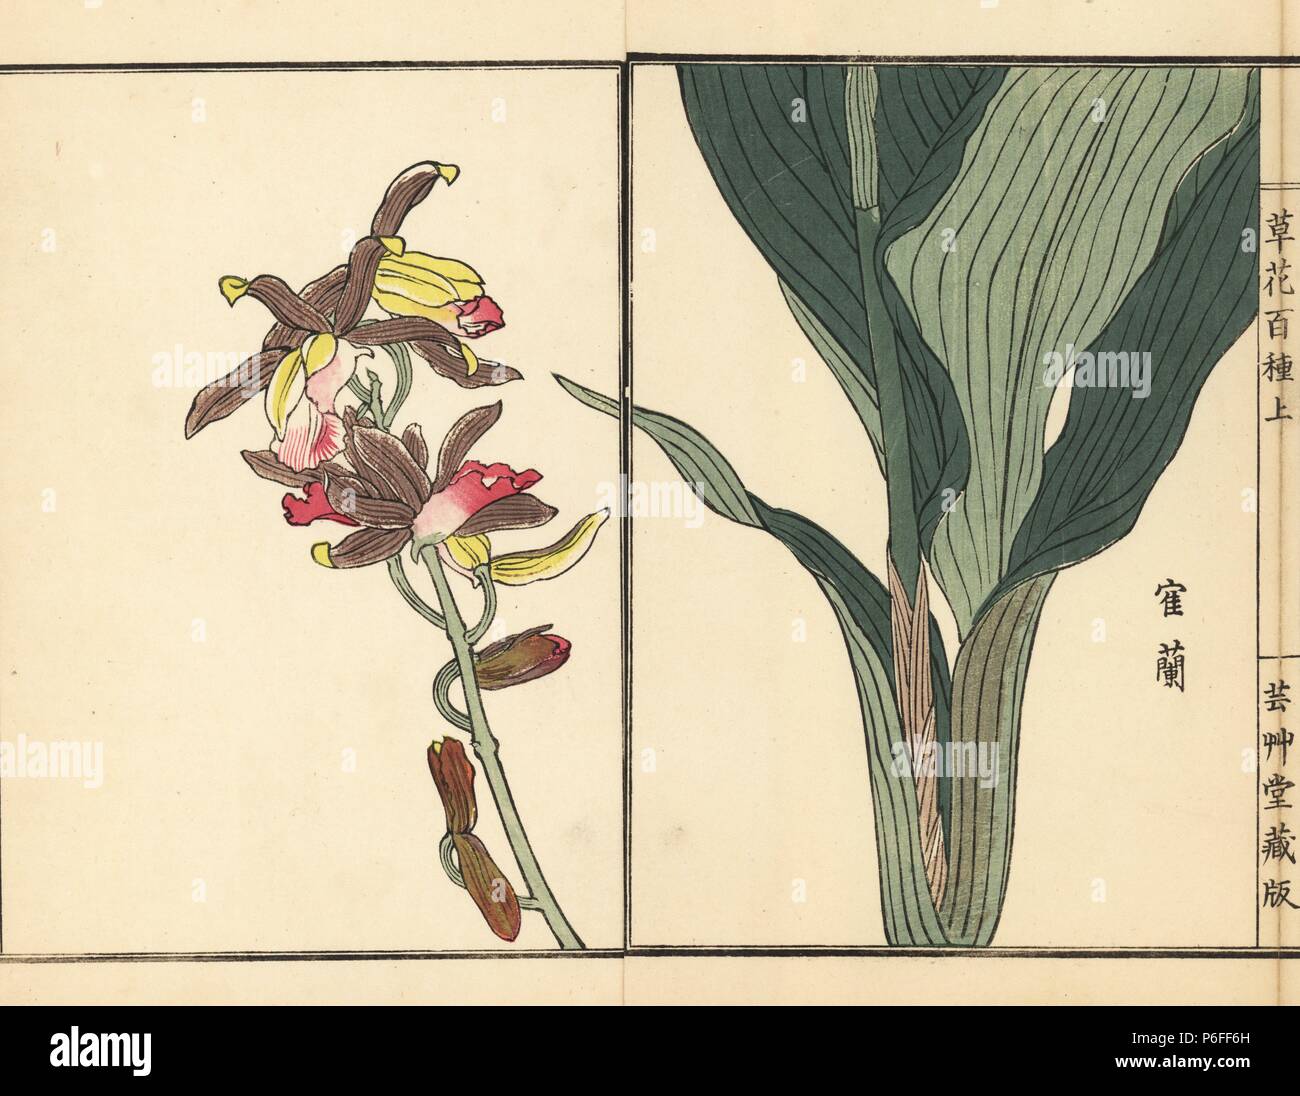 Kakuran or greater swamp orchid, Phaius tankervilleae. Endangered. Handcoloured woodblock print by Kono Bairei from Kusa Bana Hyakushu (One Hundred Varieties of Flowers), Tokyo, Yamada, 1901. Stock Photo